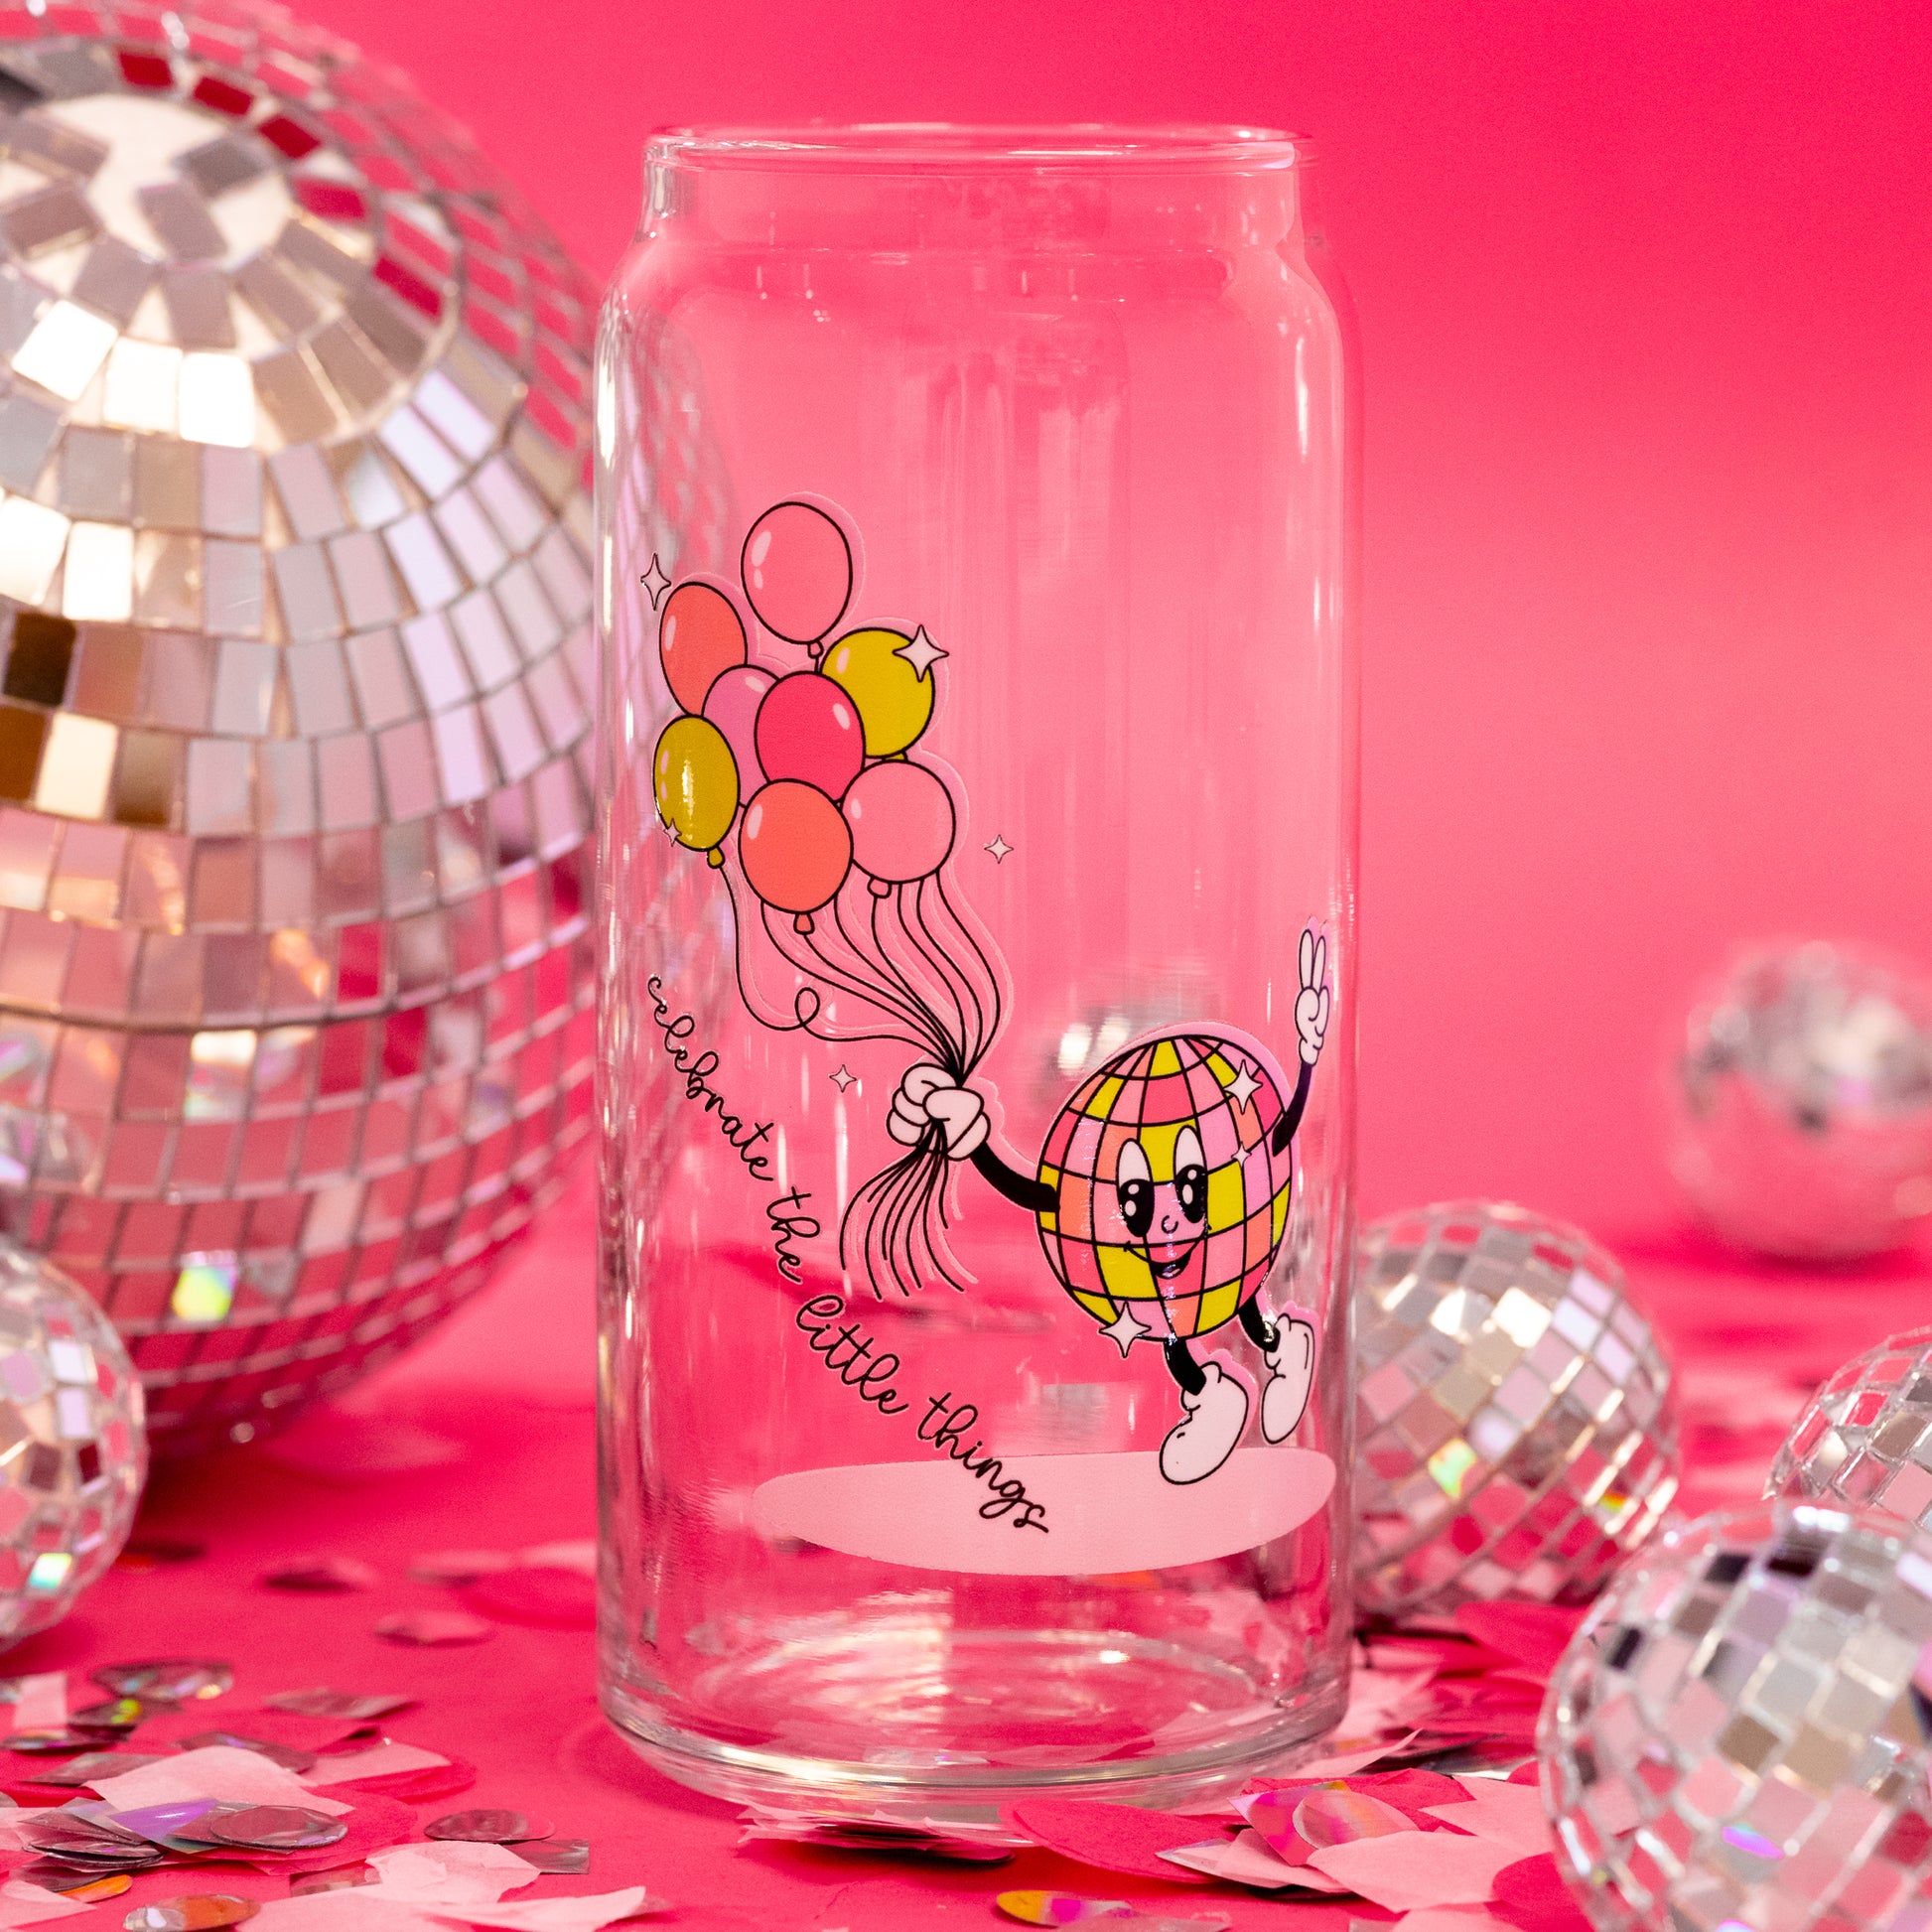 disco ball cartoon holding balloons beer can glass